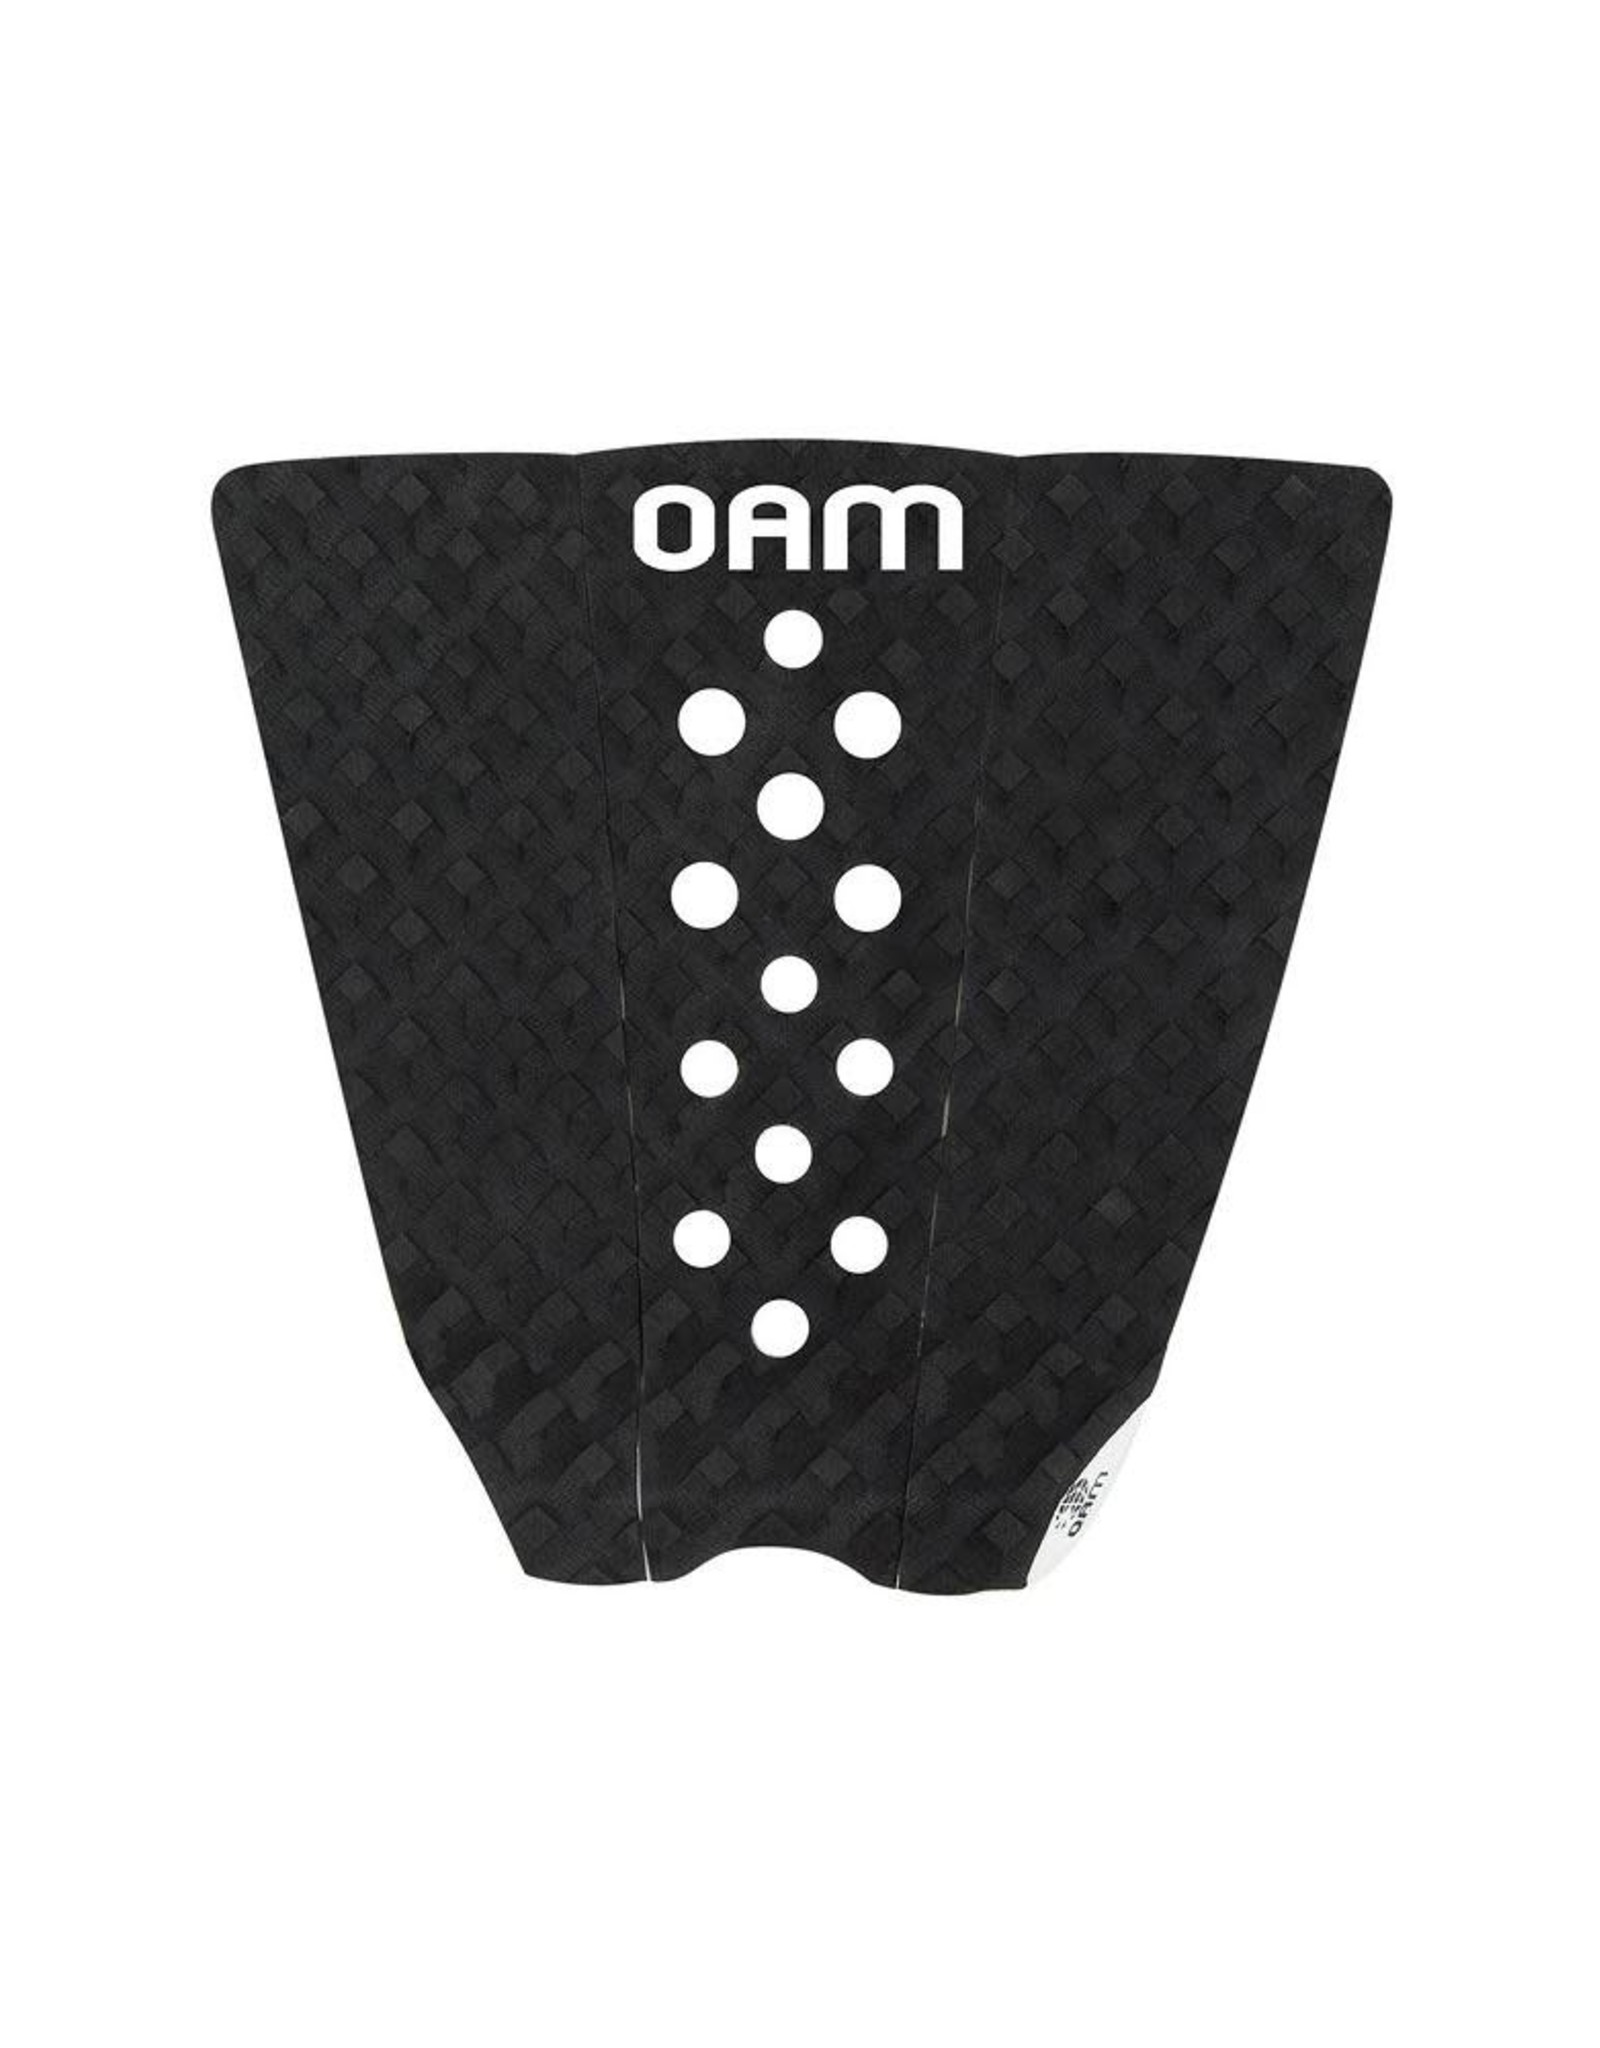 OAM OAM Surfboard Traction Pad - Brett Barley Black